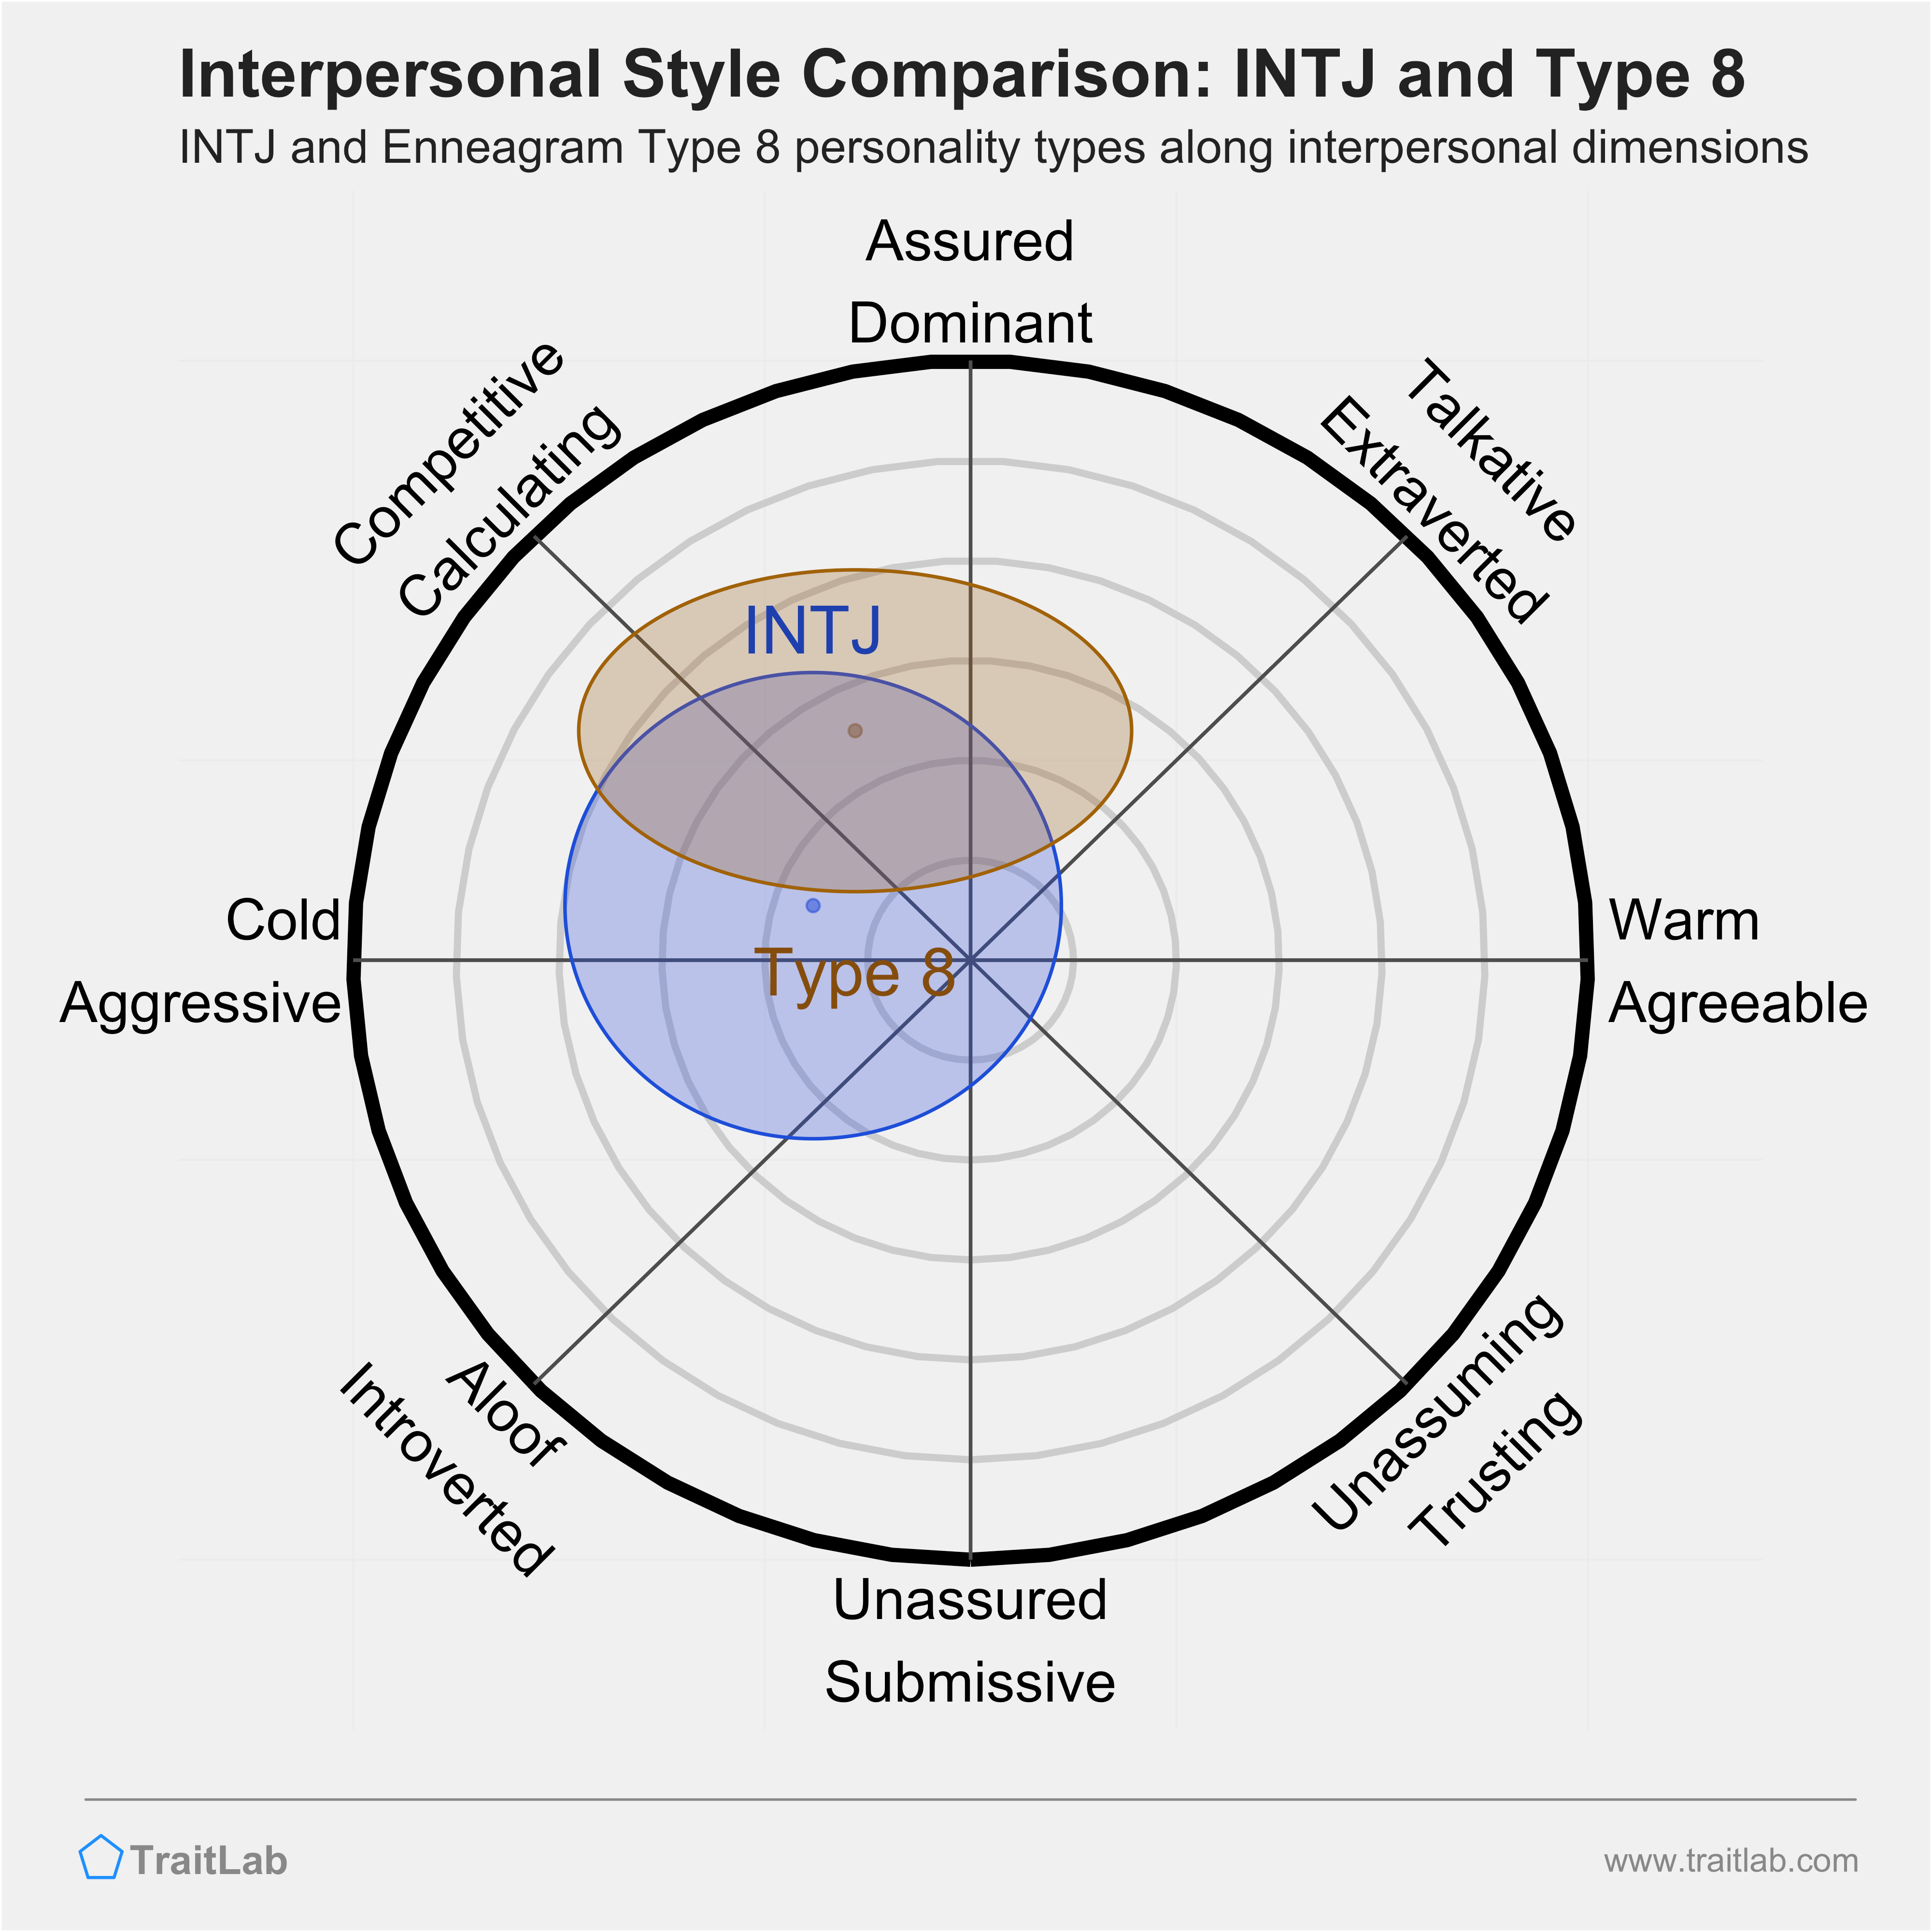 INTJ Compatibility: Insights on MBTI Types — Eightify